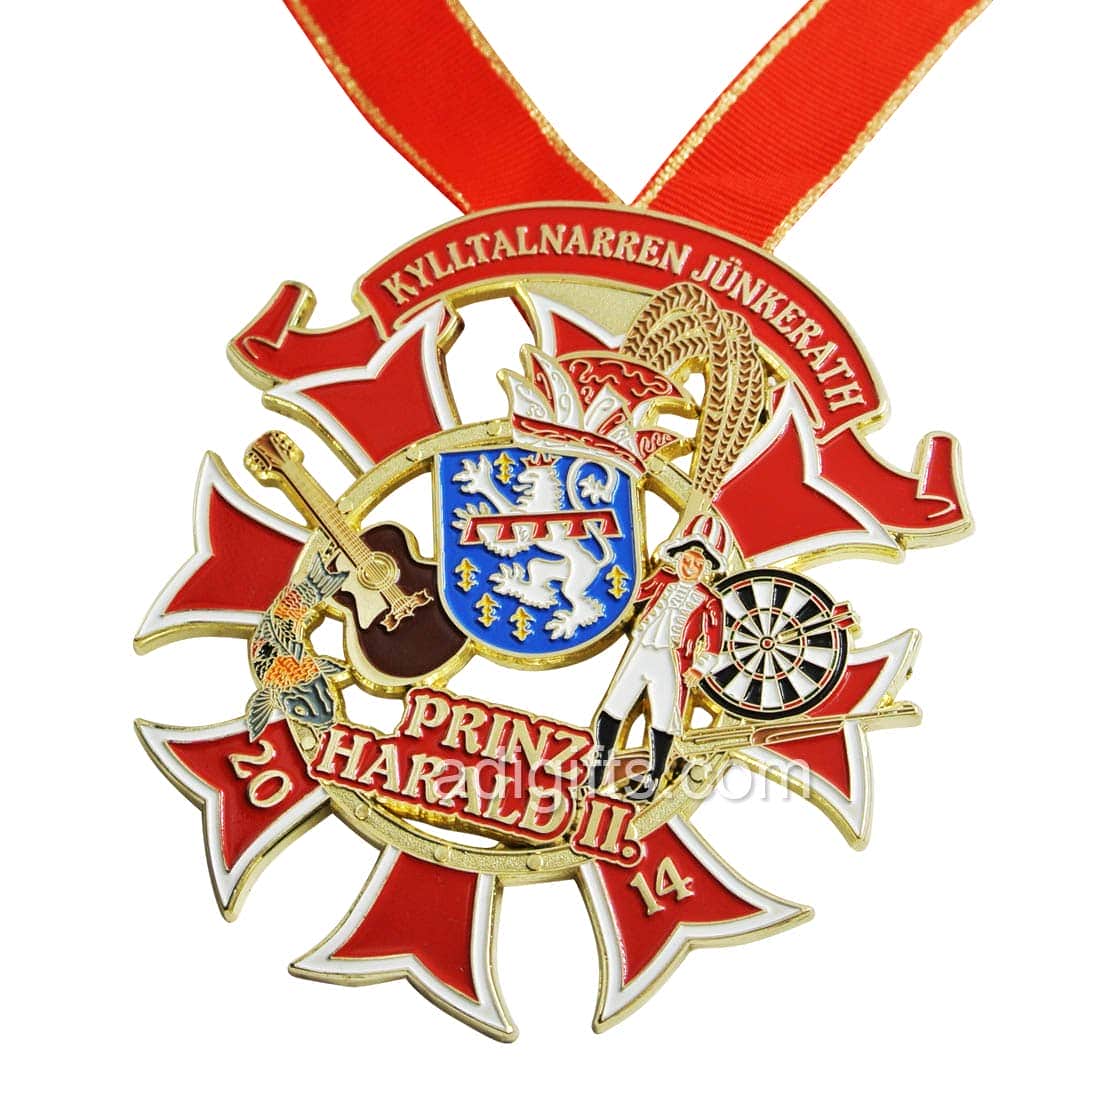 Carnival medal